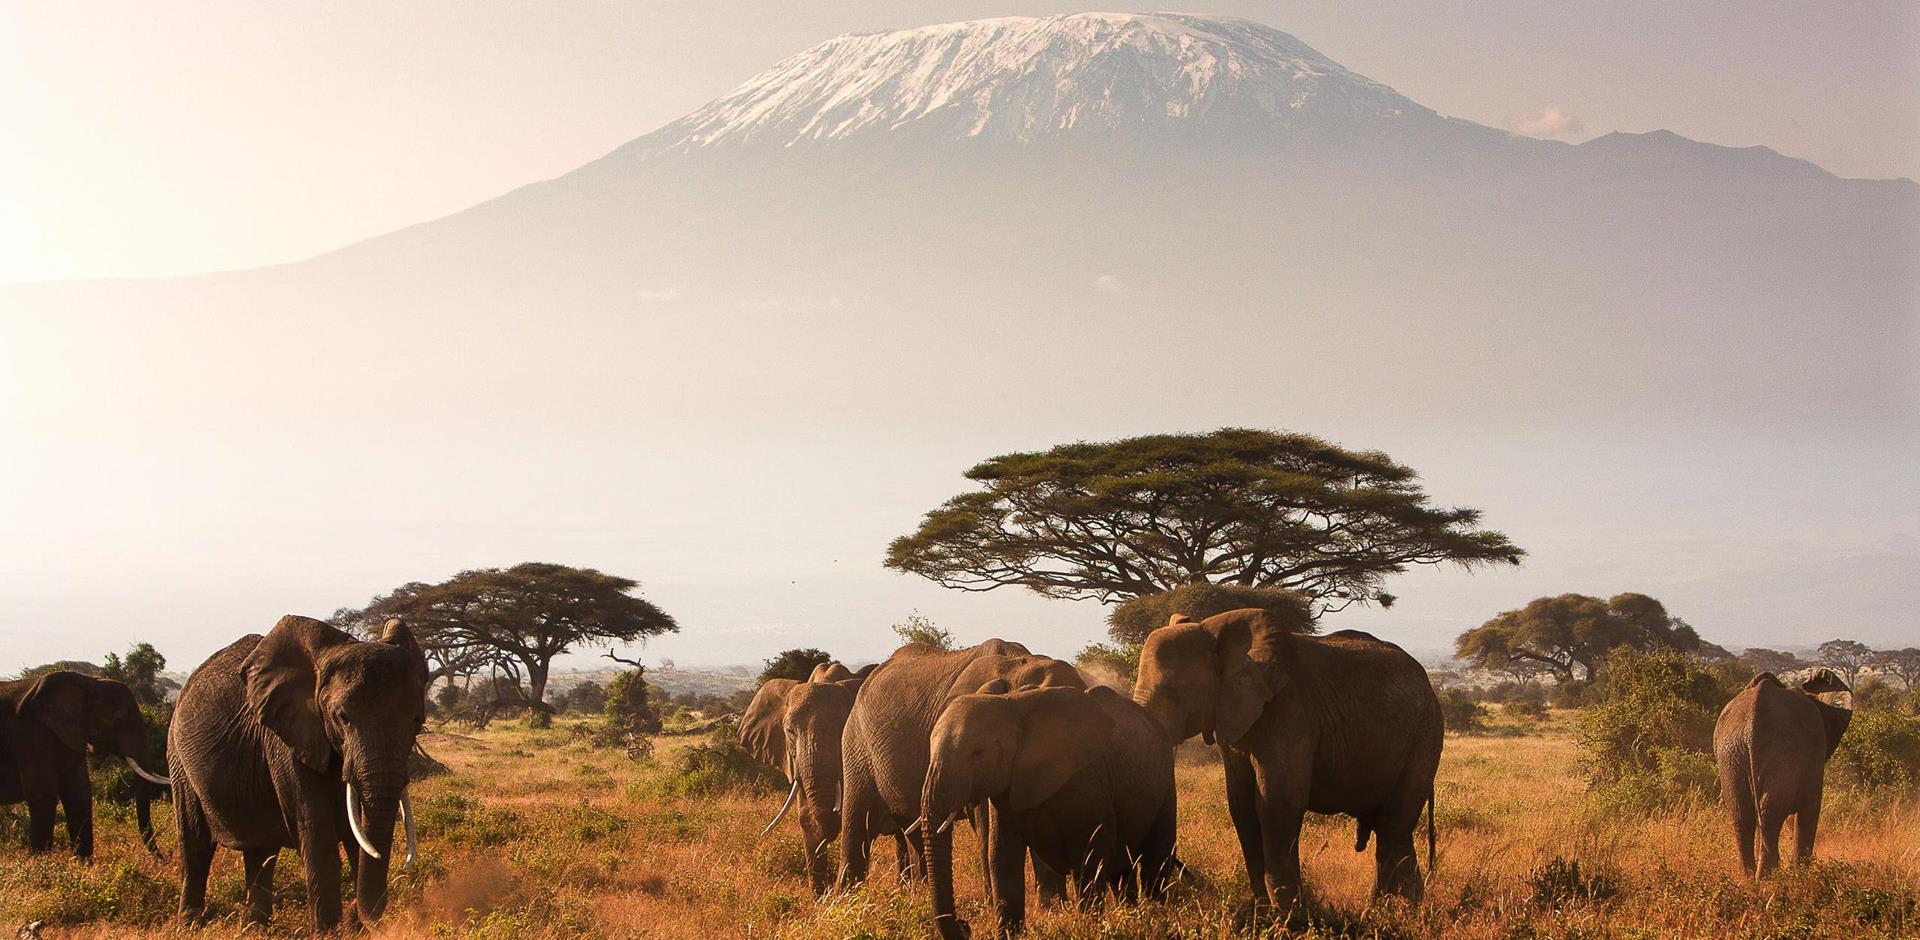 Mount Kilimanjaro, Tanzania, Africa